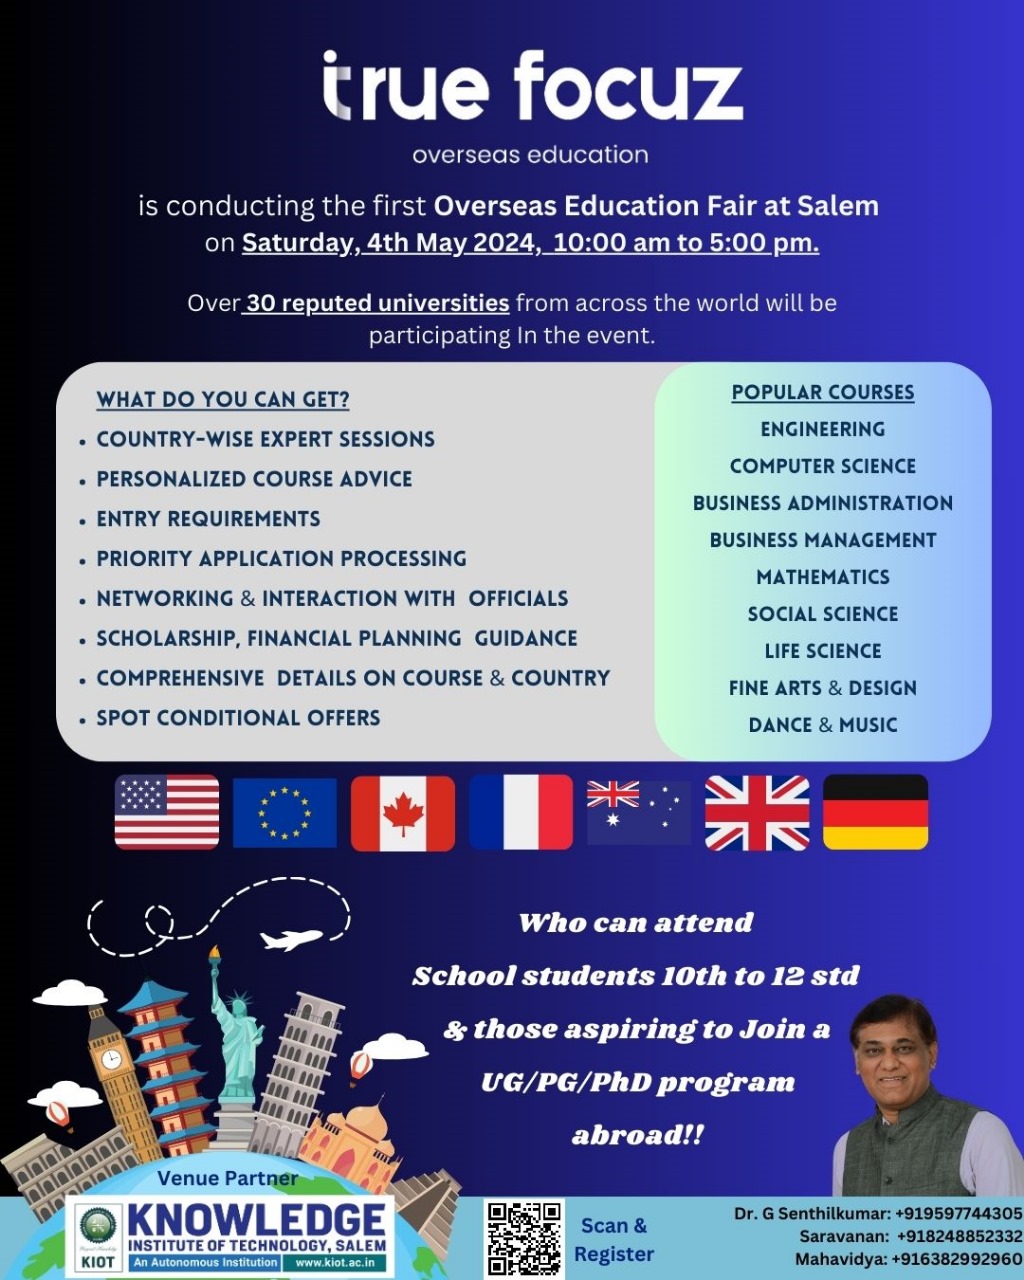 true-focuz-overseas-education-fair-2024